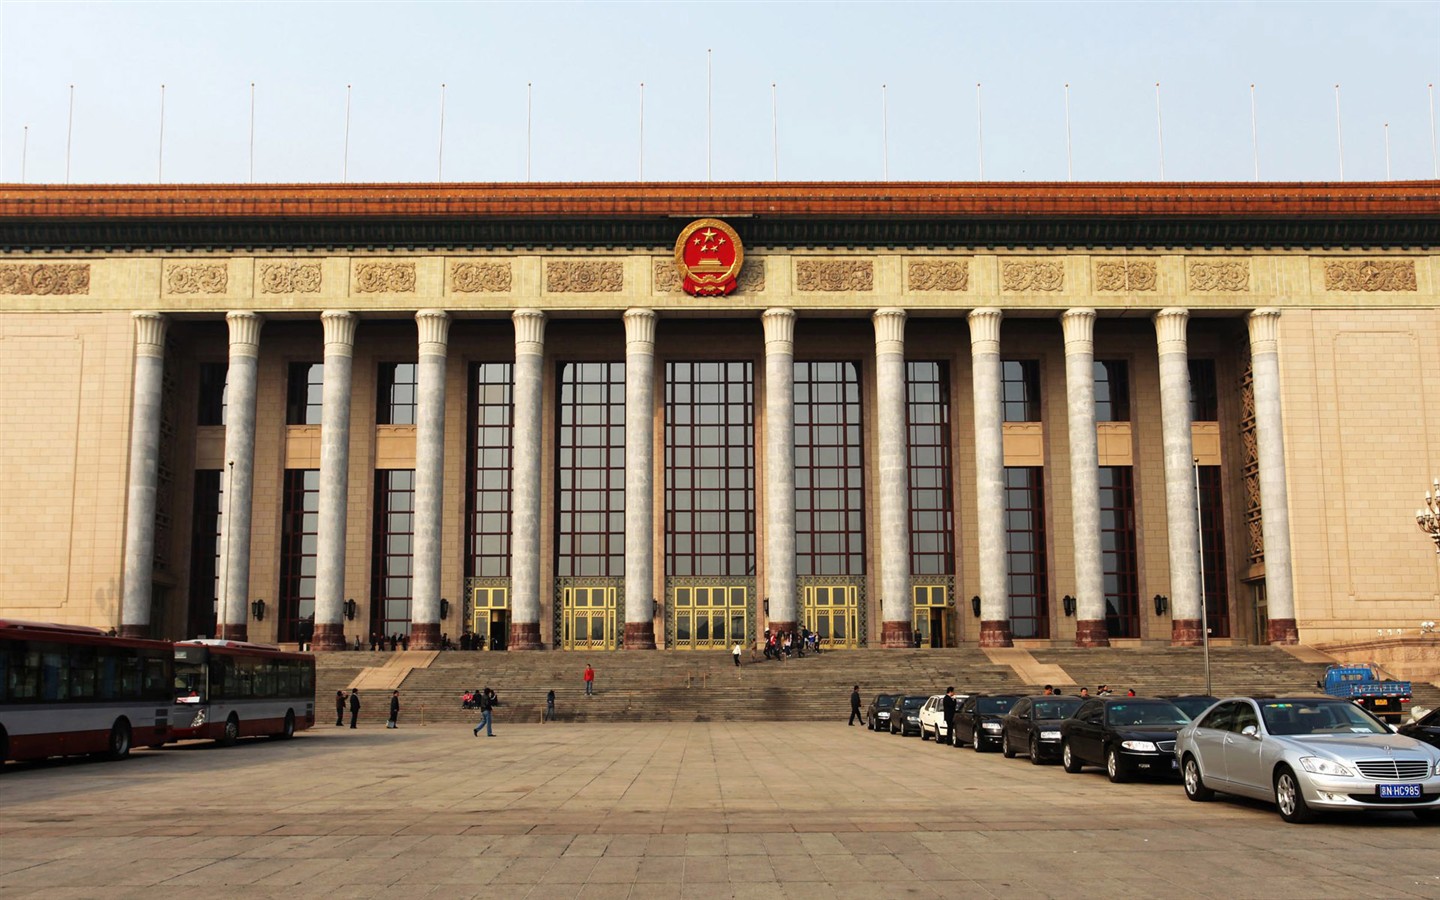 Beijing Tour - Great Hall (ggc works) #1 - 1440x900